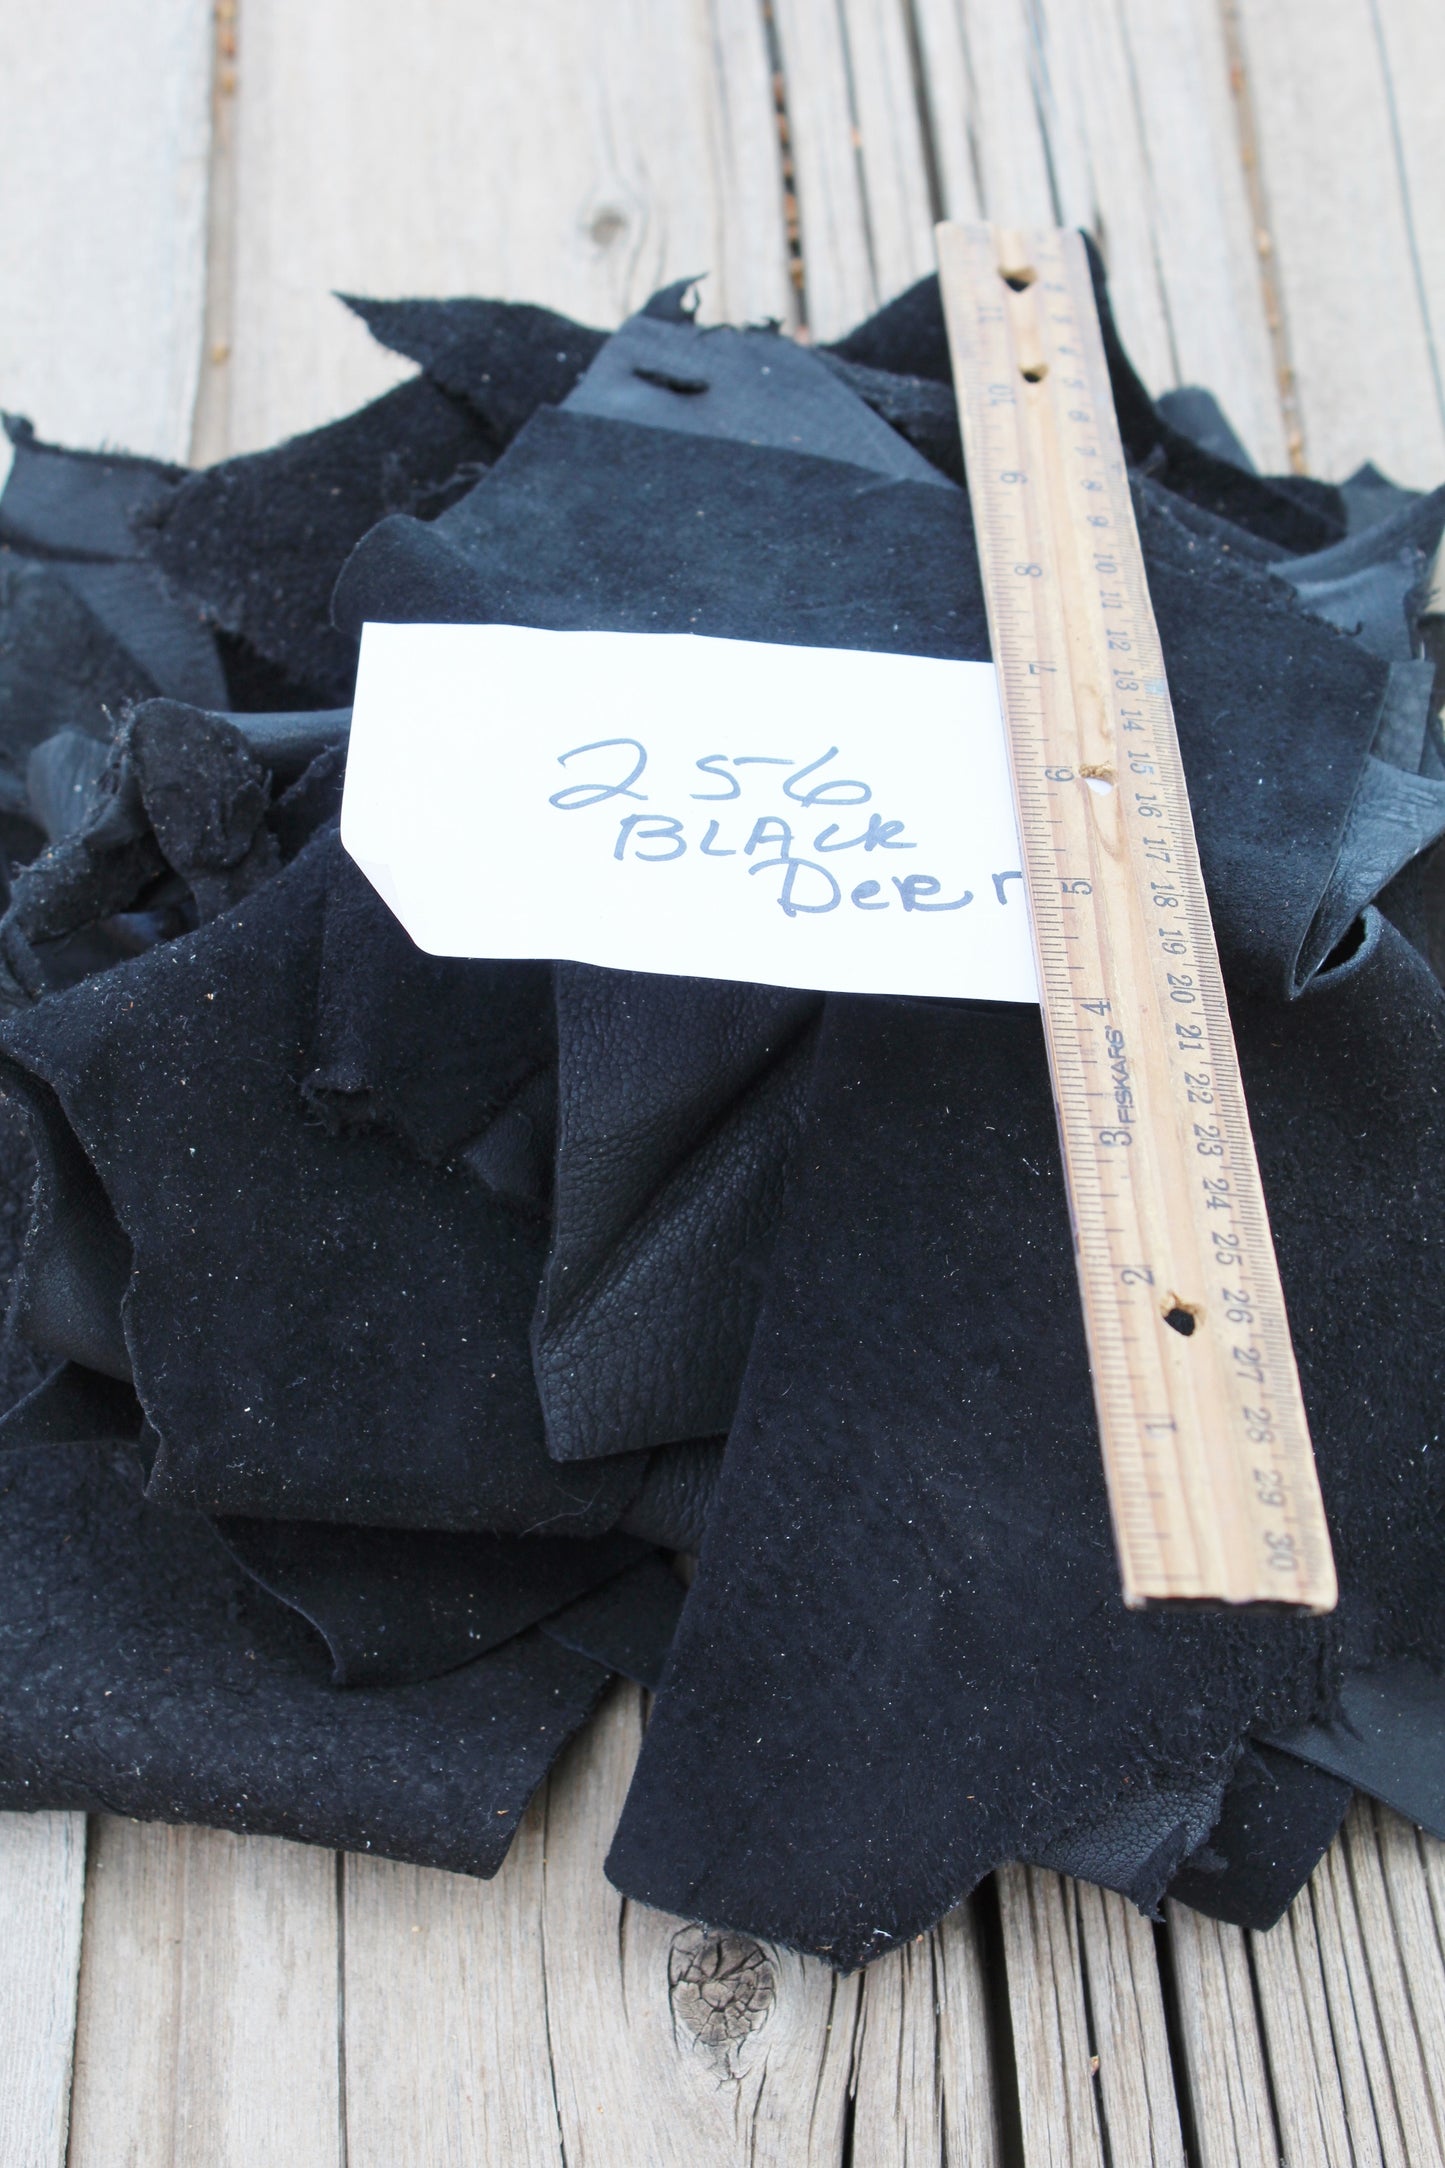 Black buckskin leather scraps #256